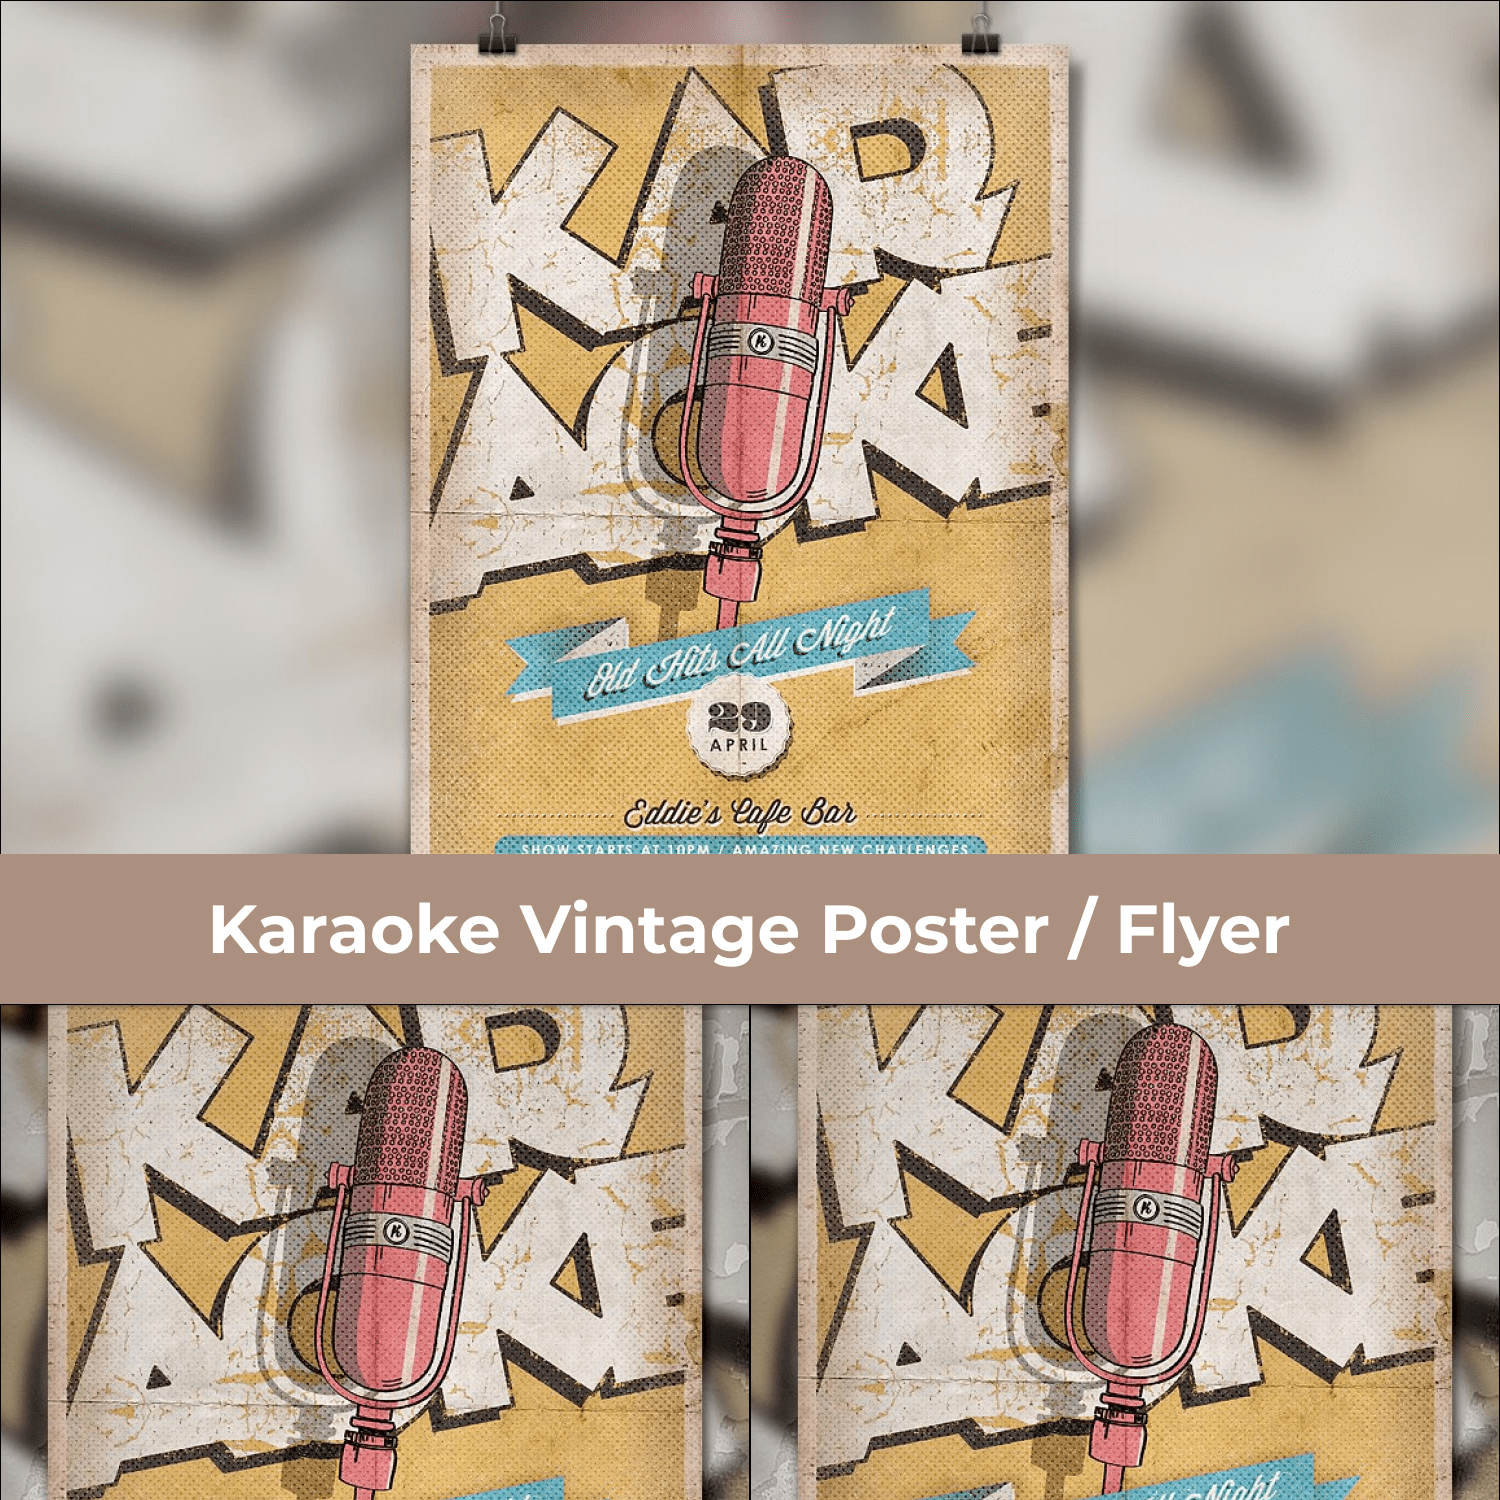 Karaoke Vintage Poster Flyer preview 1500x1500 1